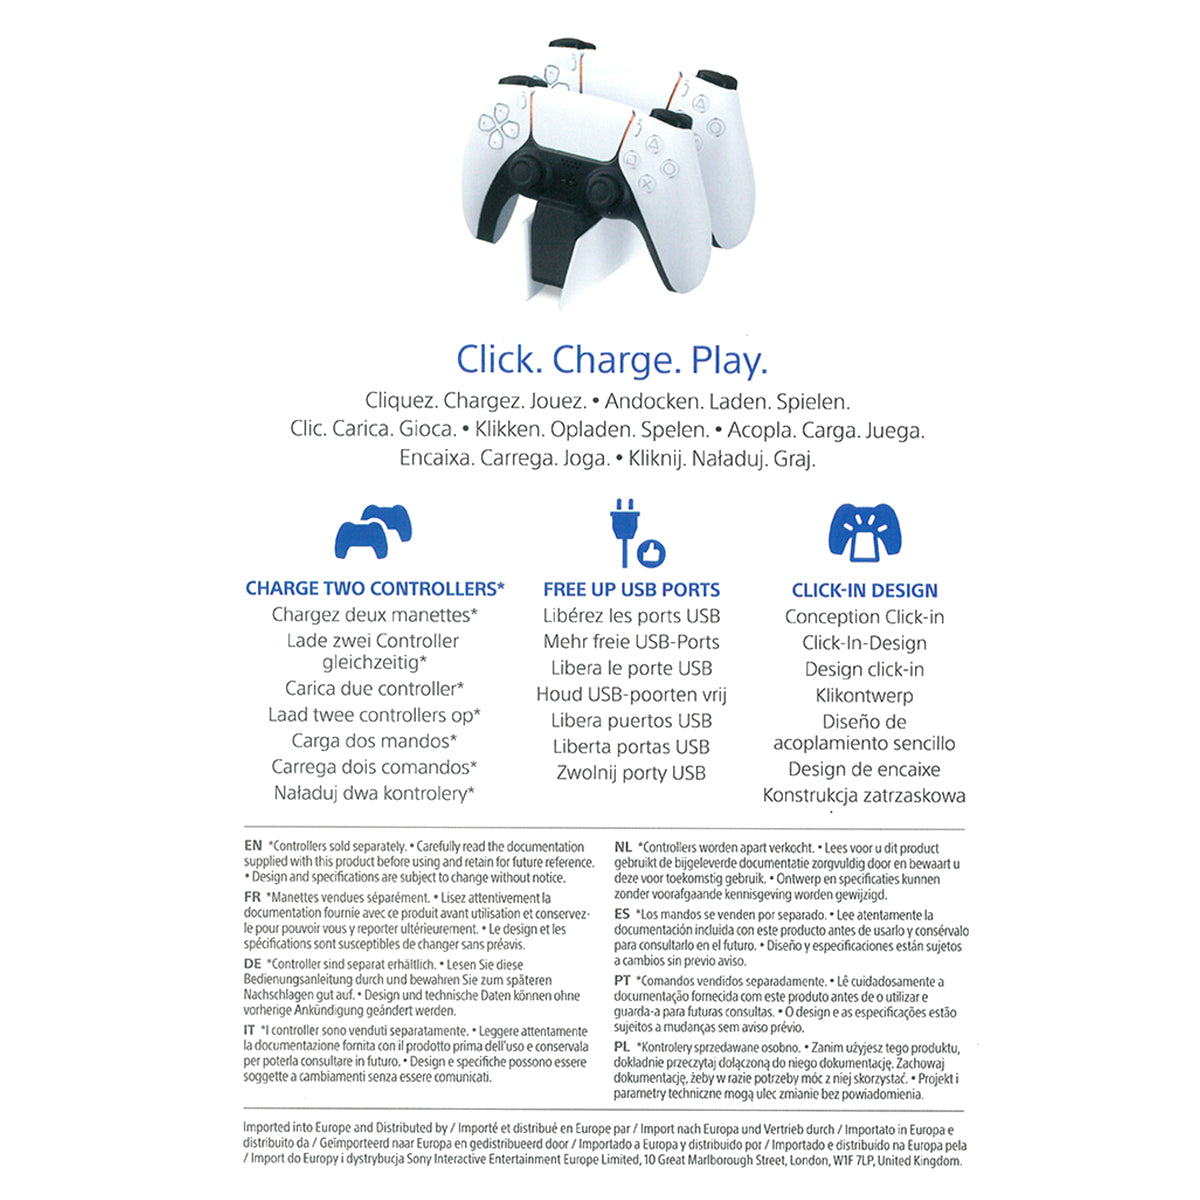 Sony PS5 DualSense Charging Base